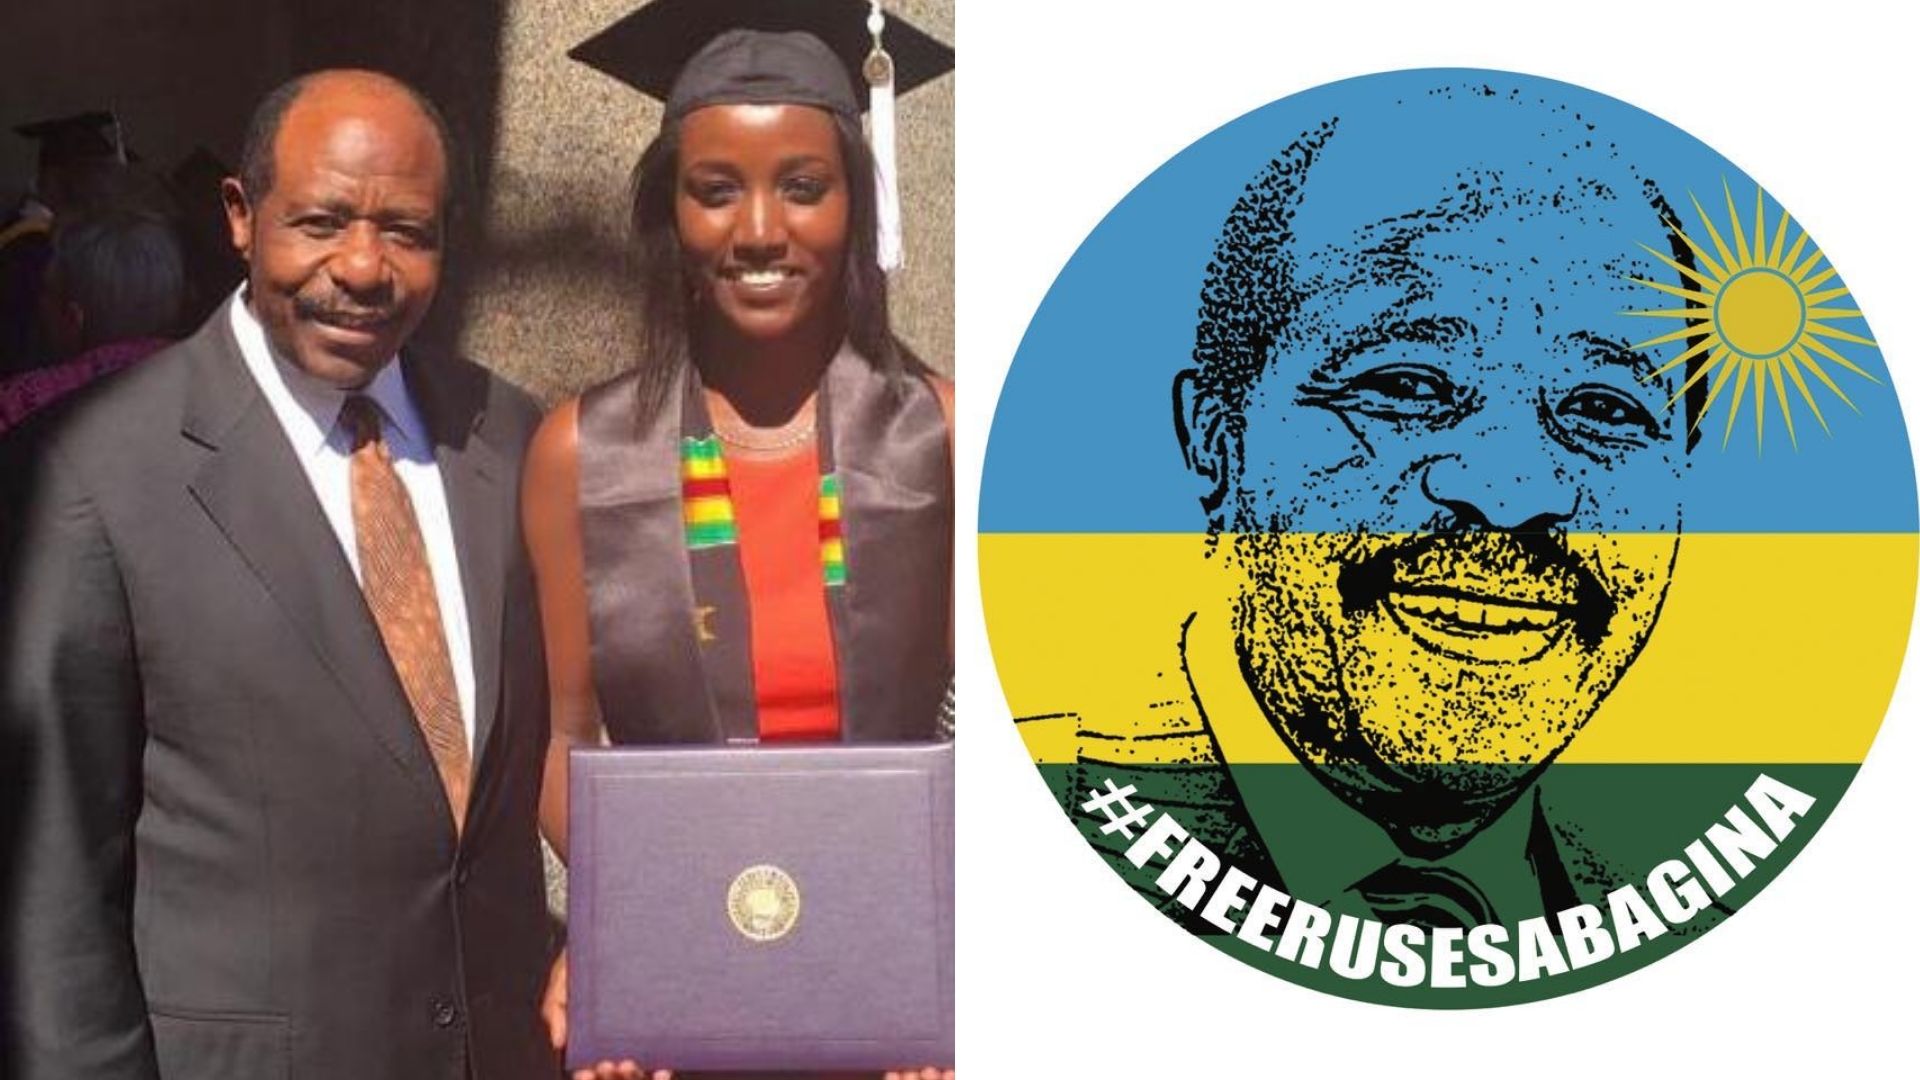 Carine Kanimba: “In the name of my father, Paul Rusesabagina” –  hero of the movie Hotel Rwanda